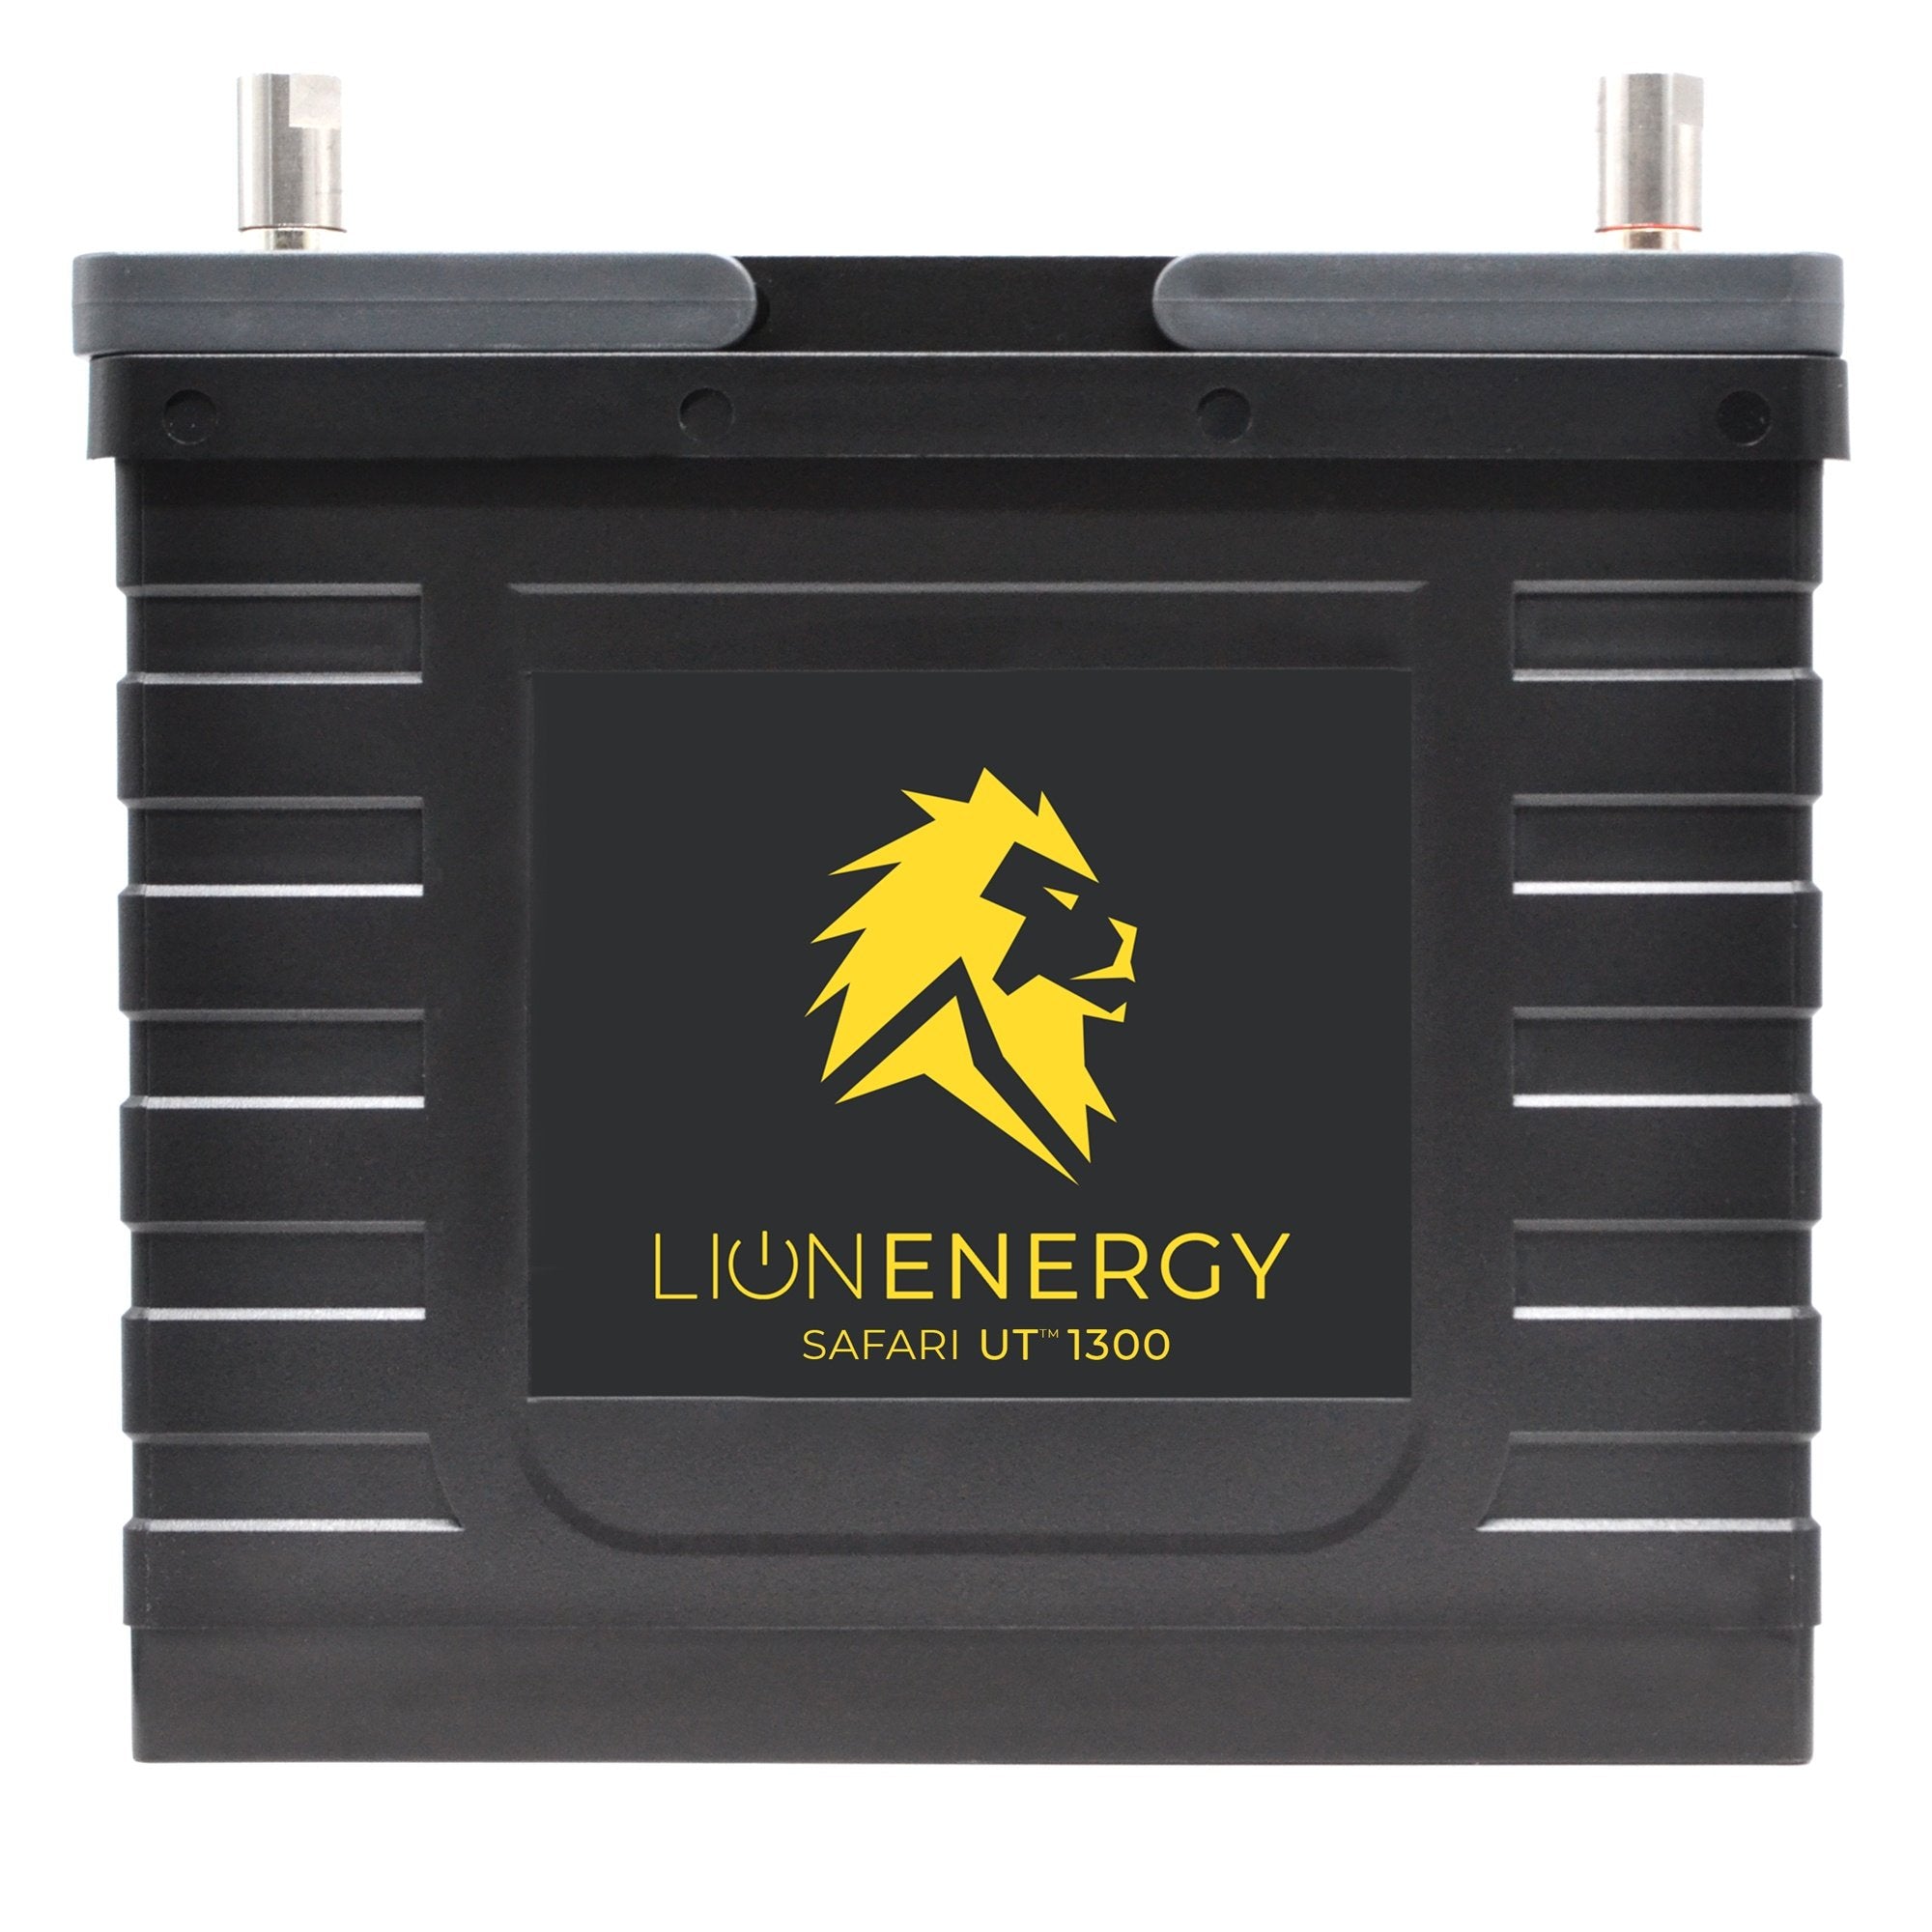 Lion Energy Safari UT 1300 150A Battery